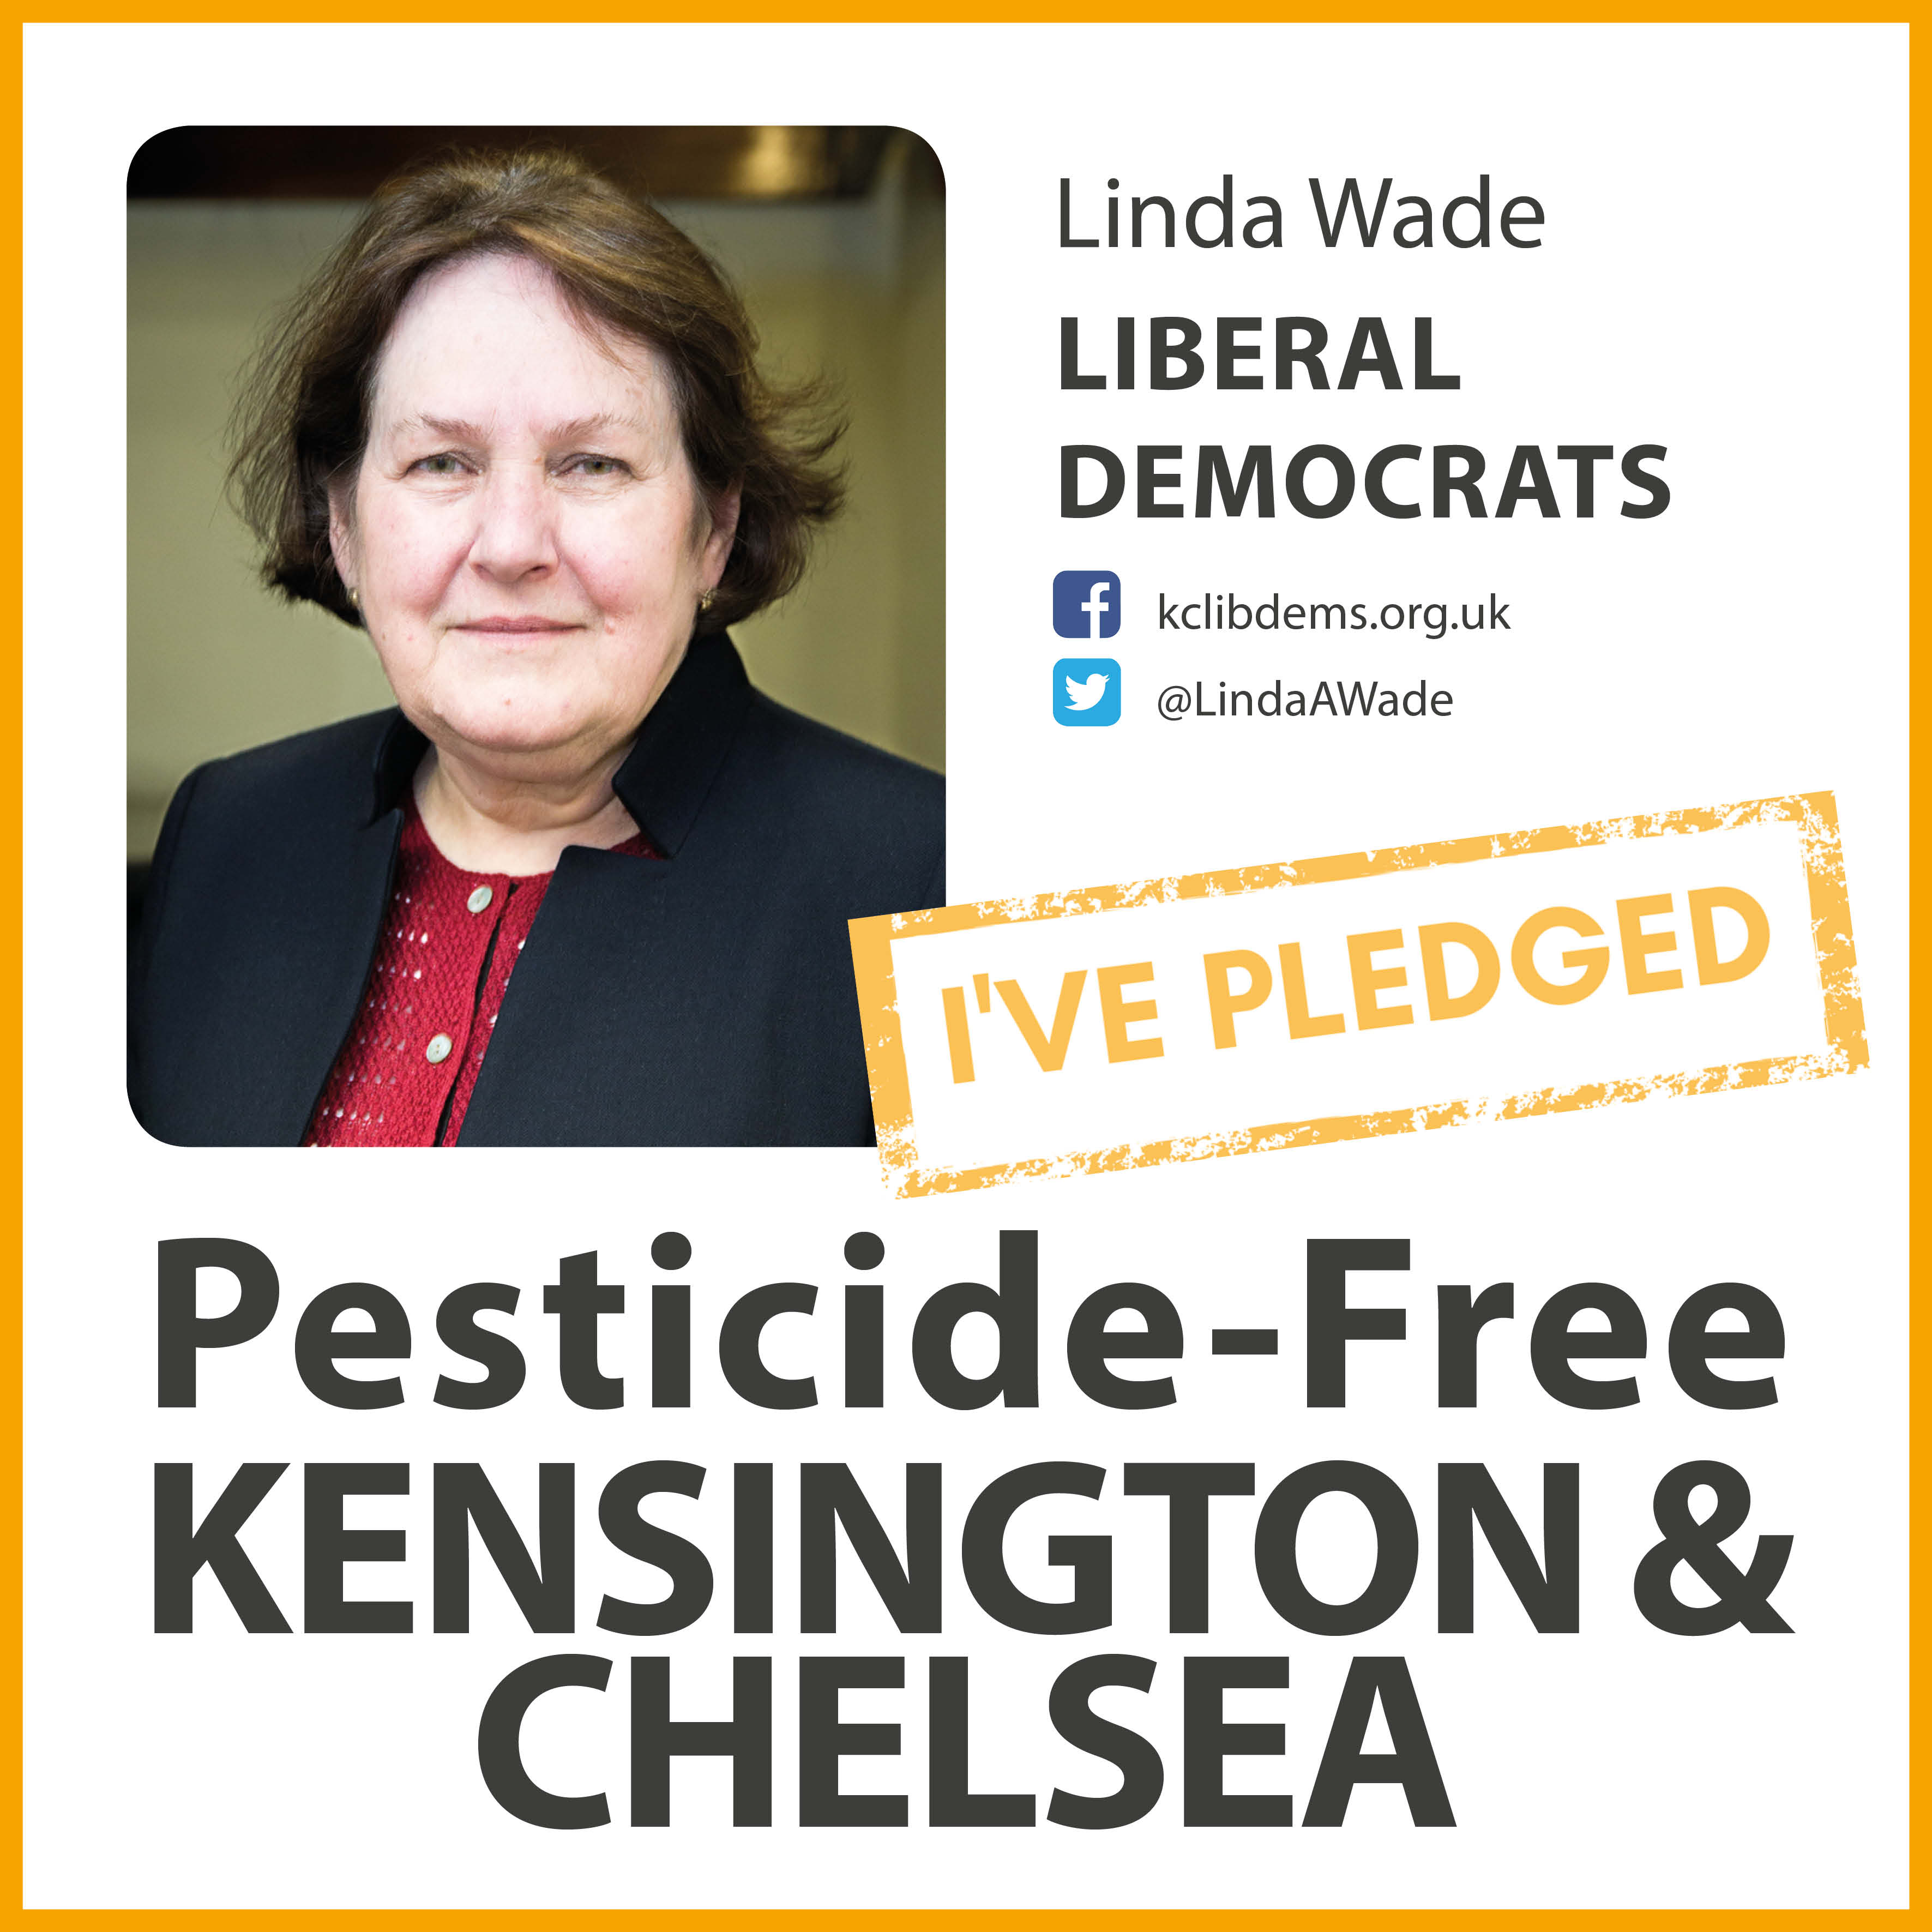 Linda Wade has taken the pesticide-free pledge in Kensington & Chelsea